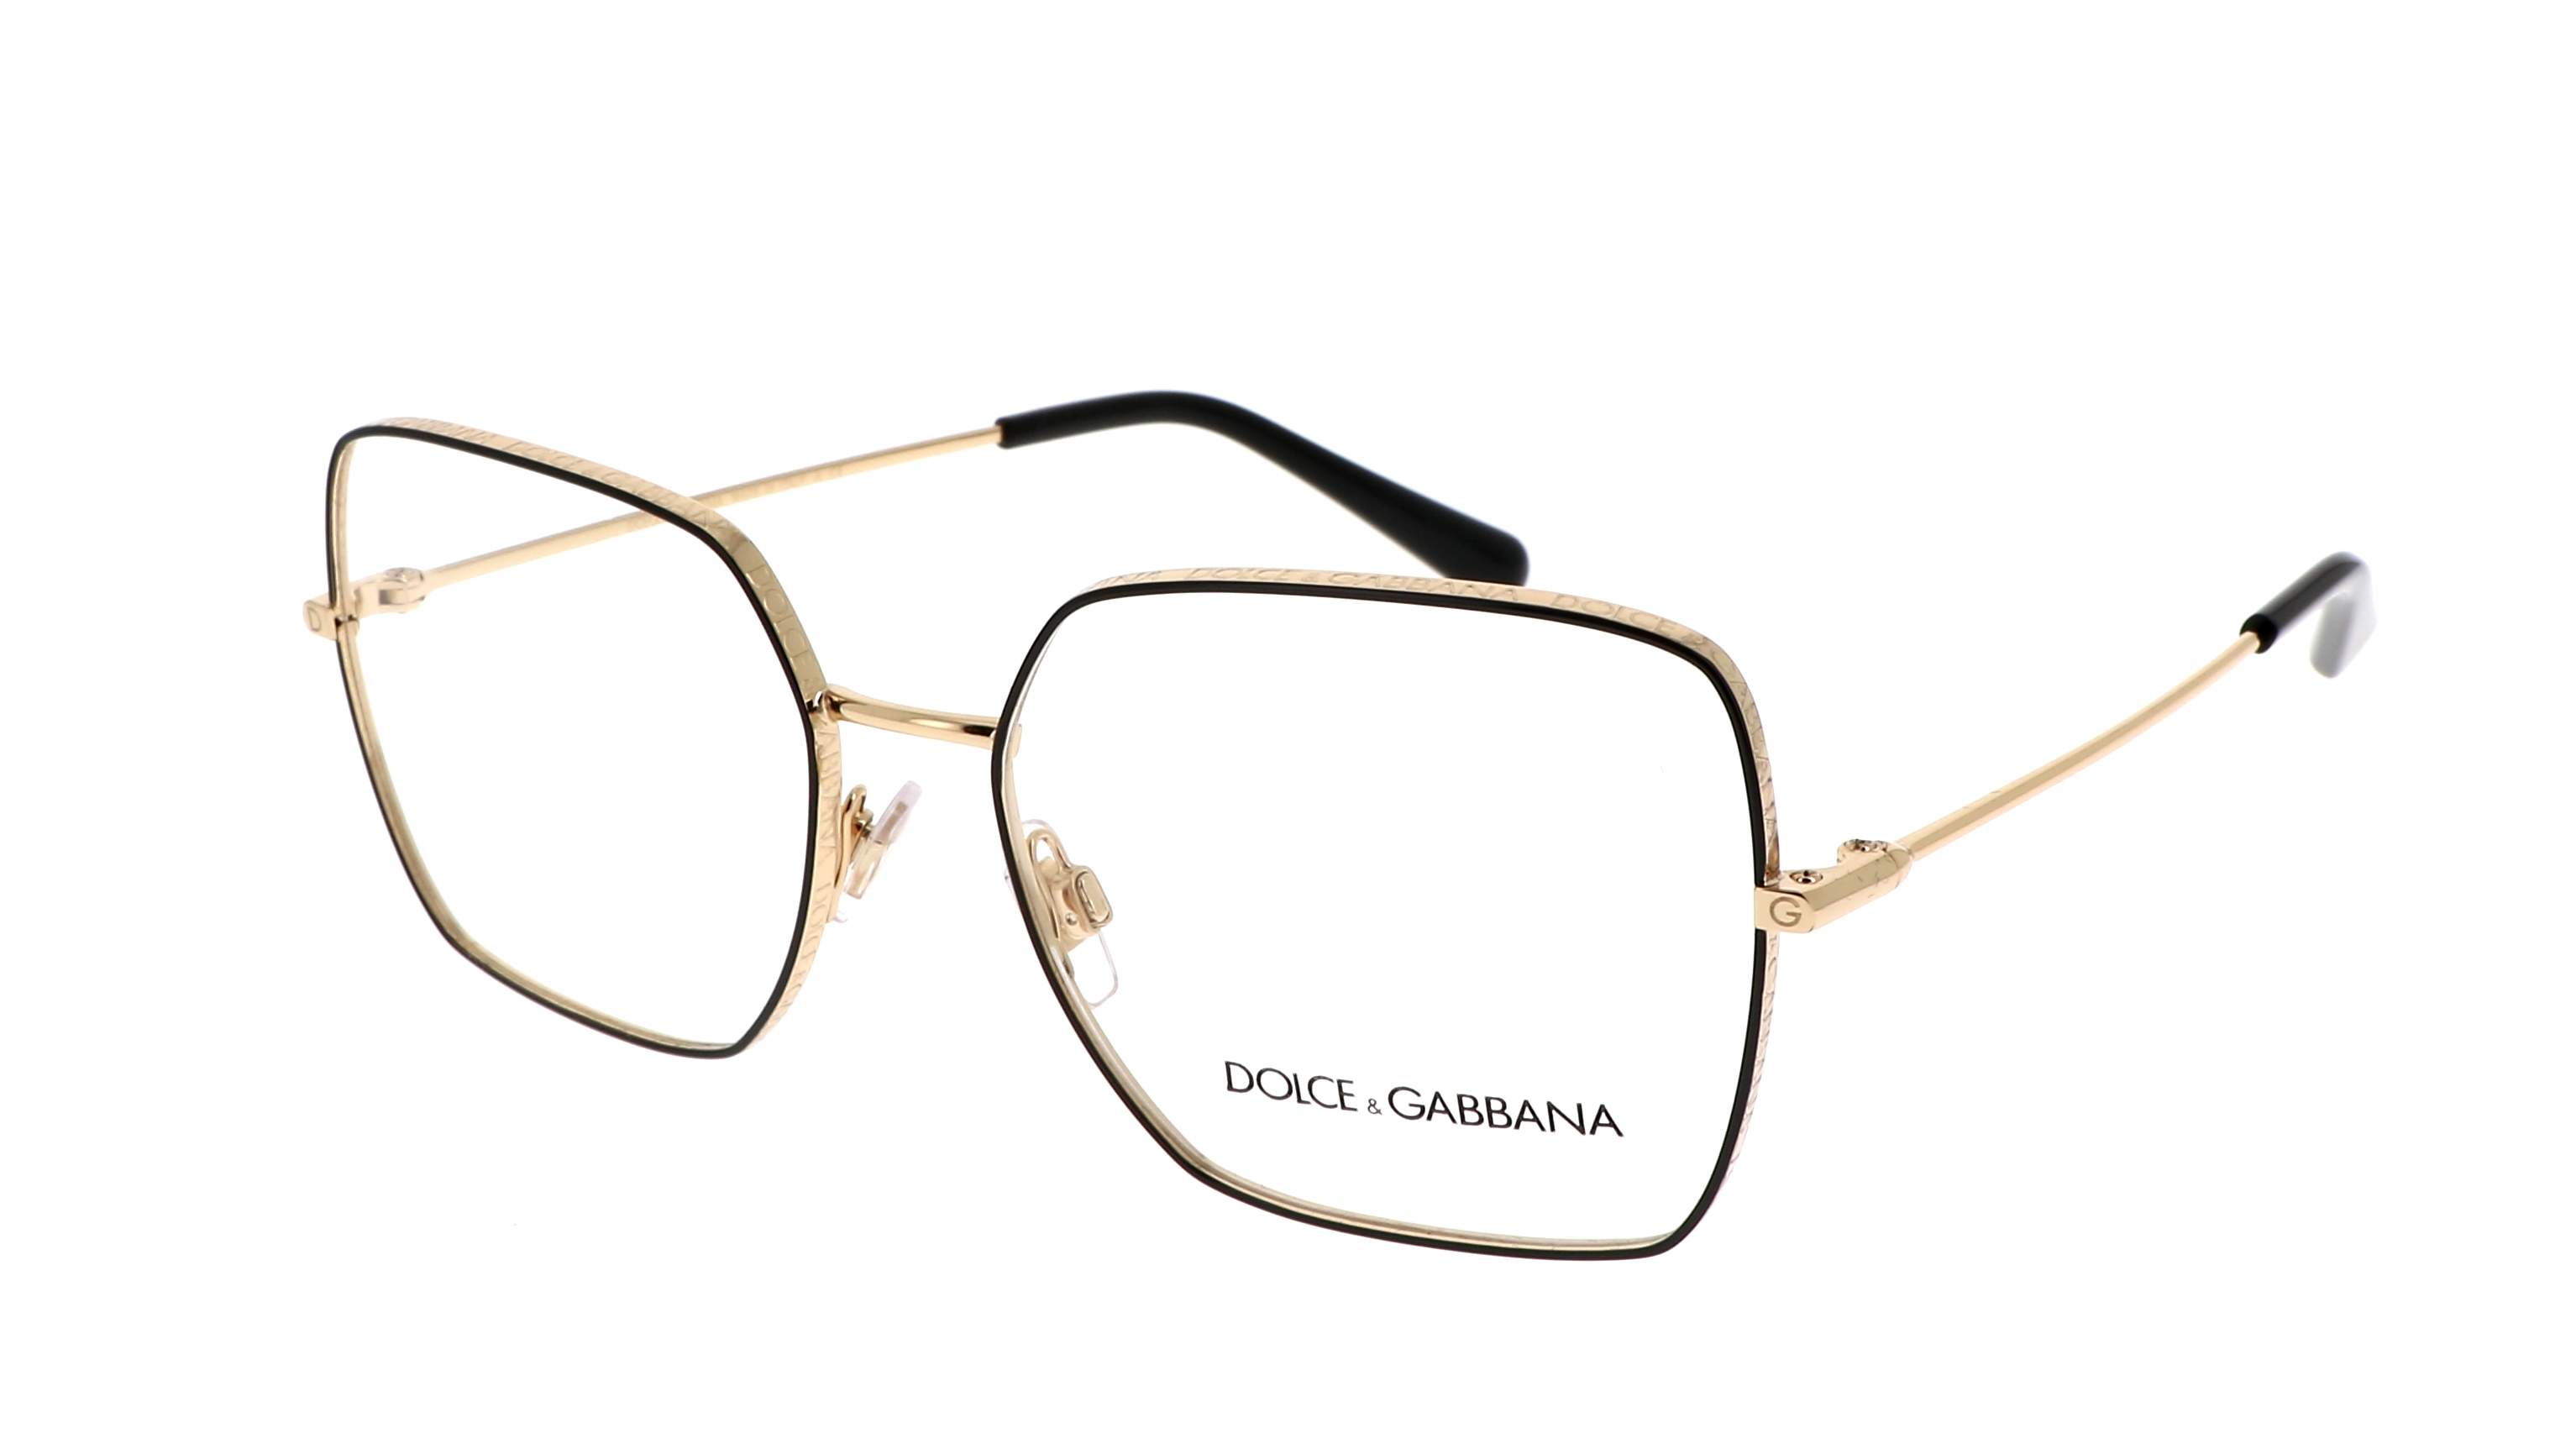 dolce and gabbana eyeglasses price